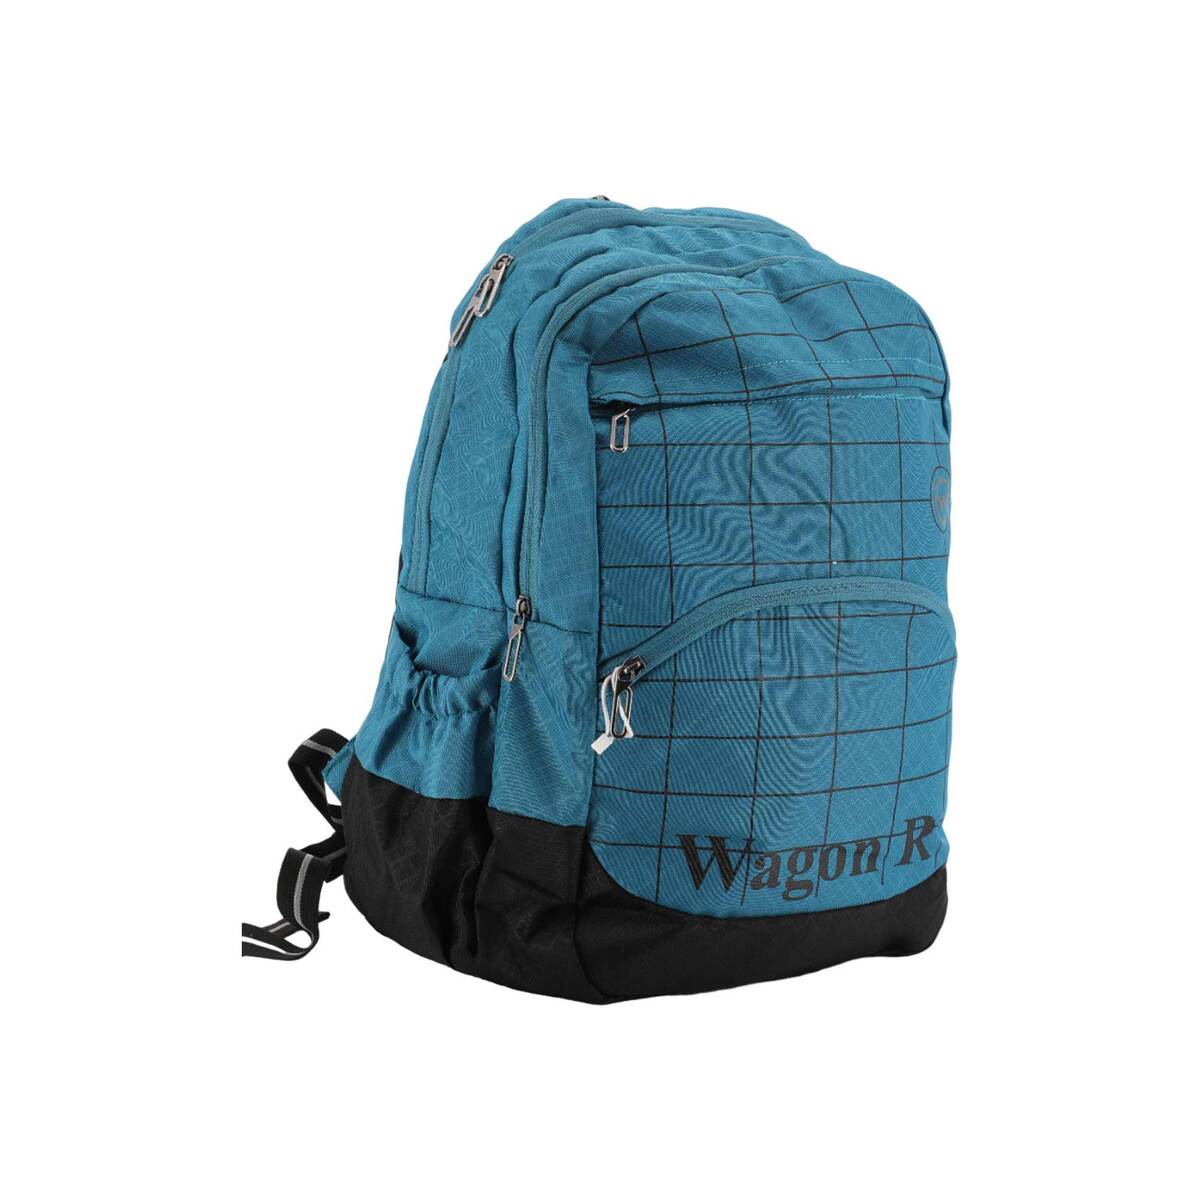 Wagon R Urban Backpack 19"